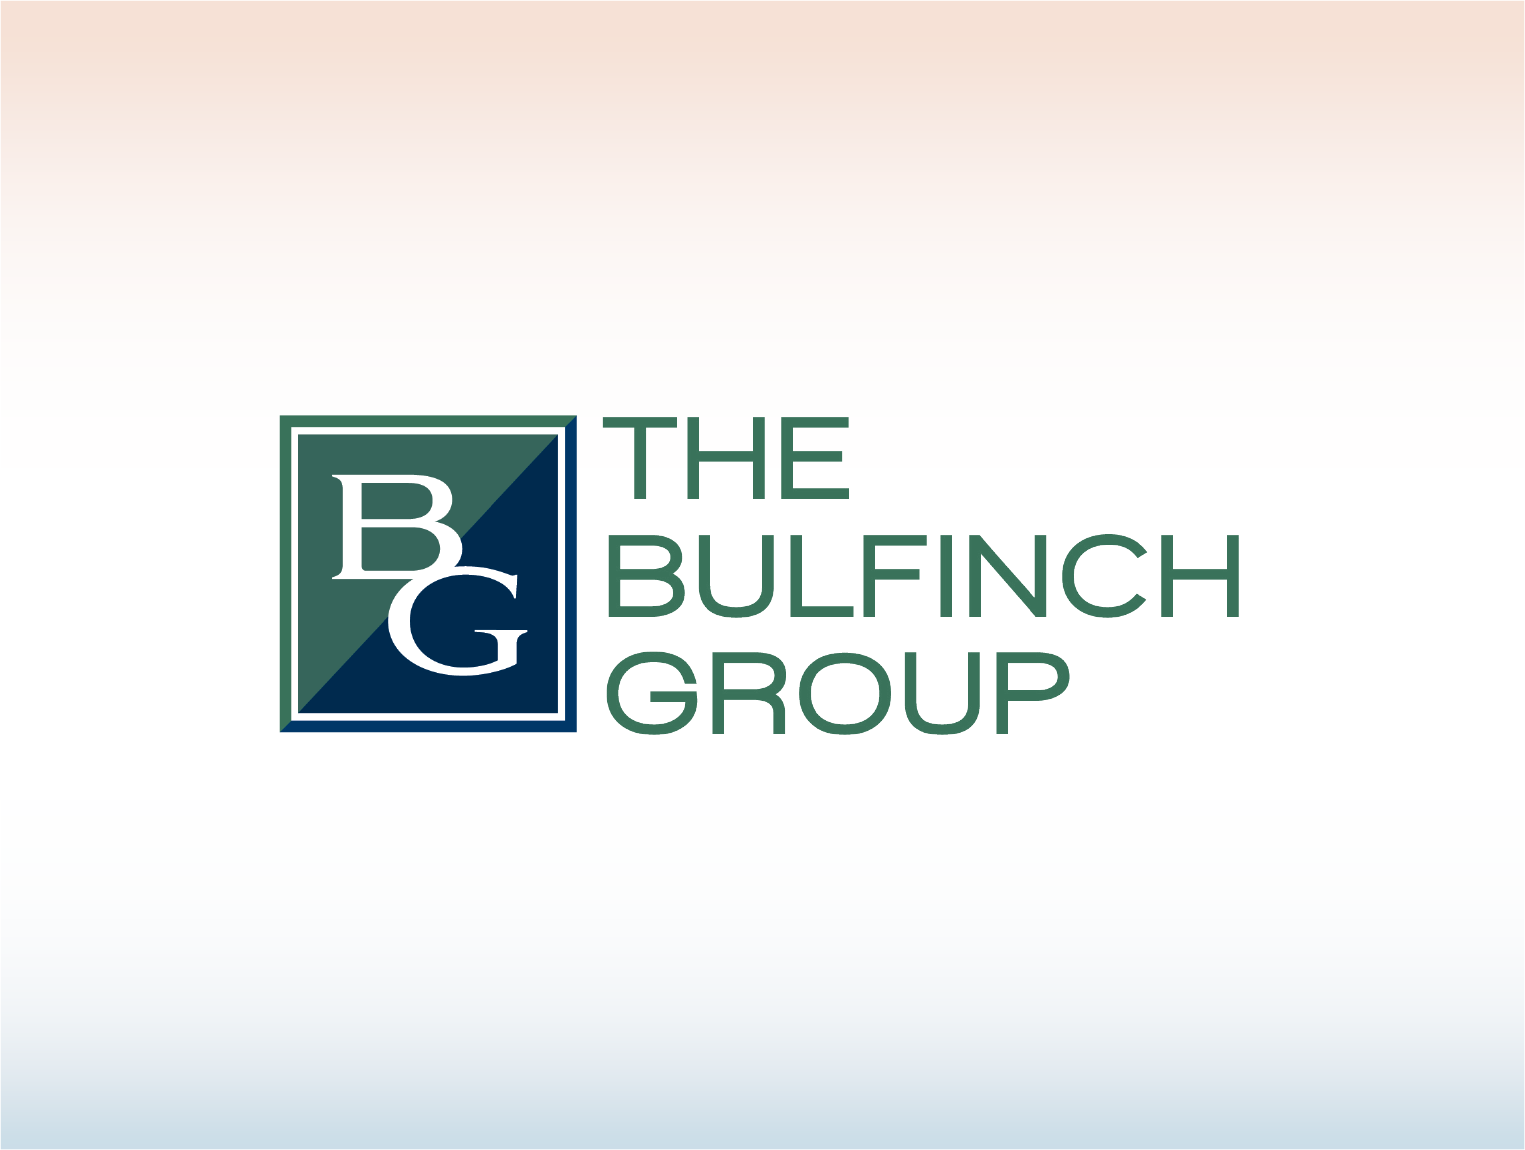 The Bulfinch Group Logo